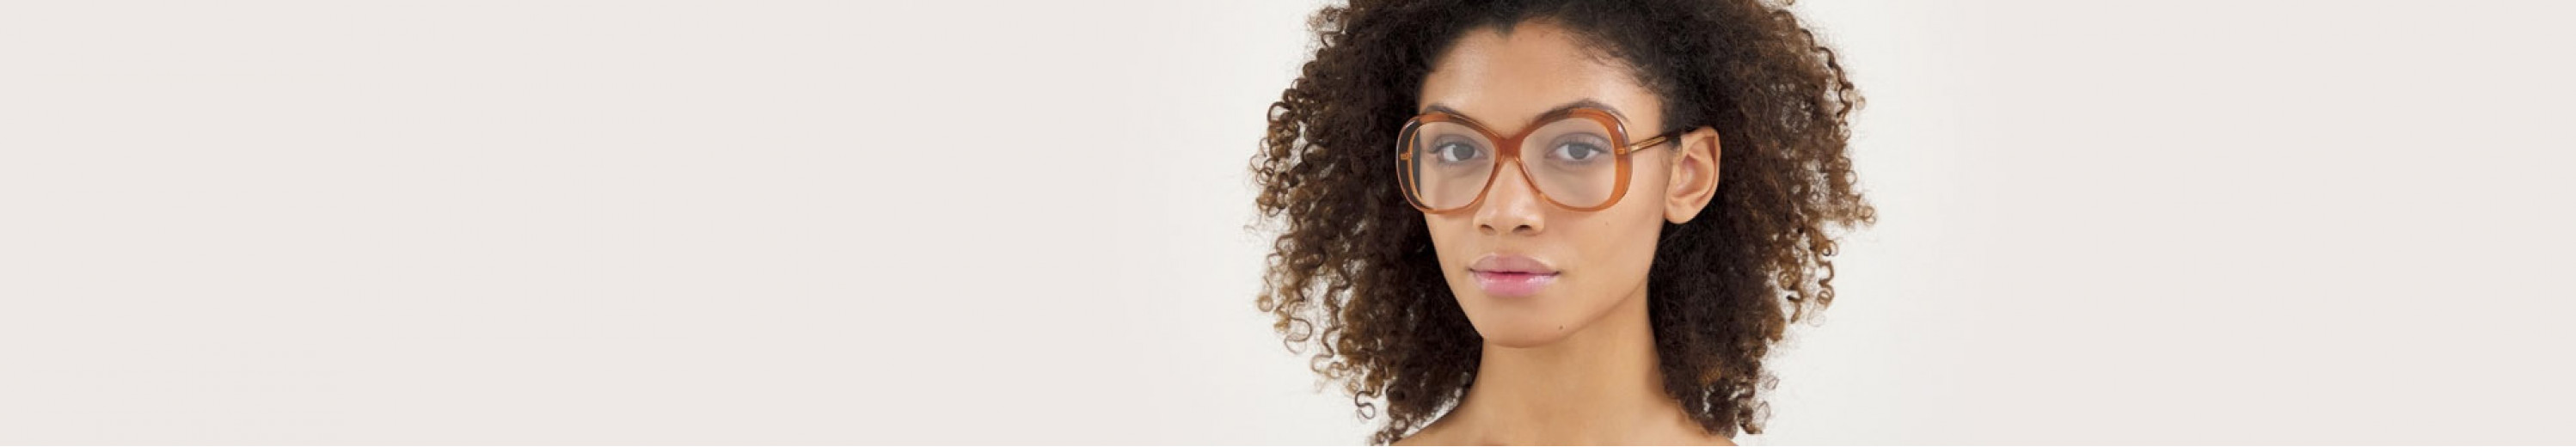 Butterfly Eyeglasses for Women